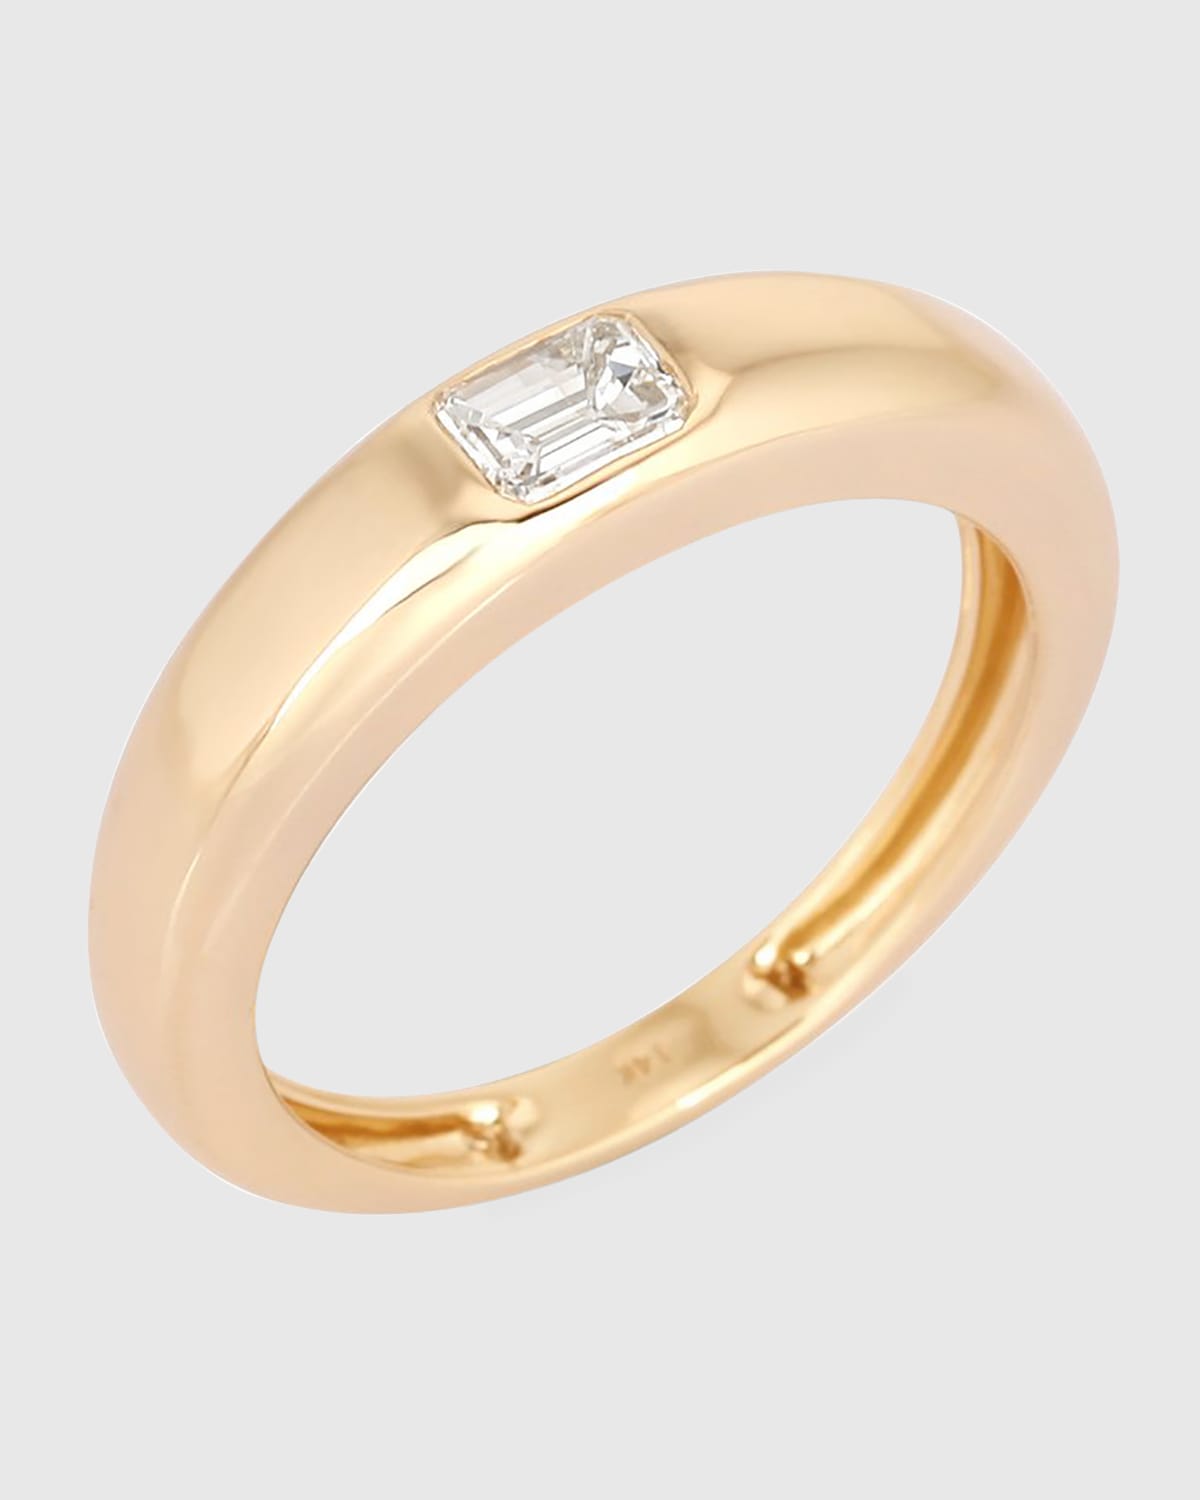 Kastel Jewelry Baguette Diamond Ring in 14k Yellow Gold, Size 7